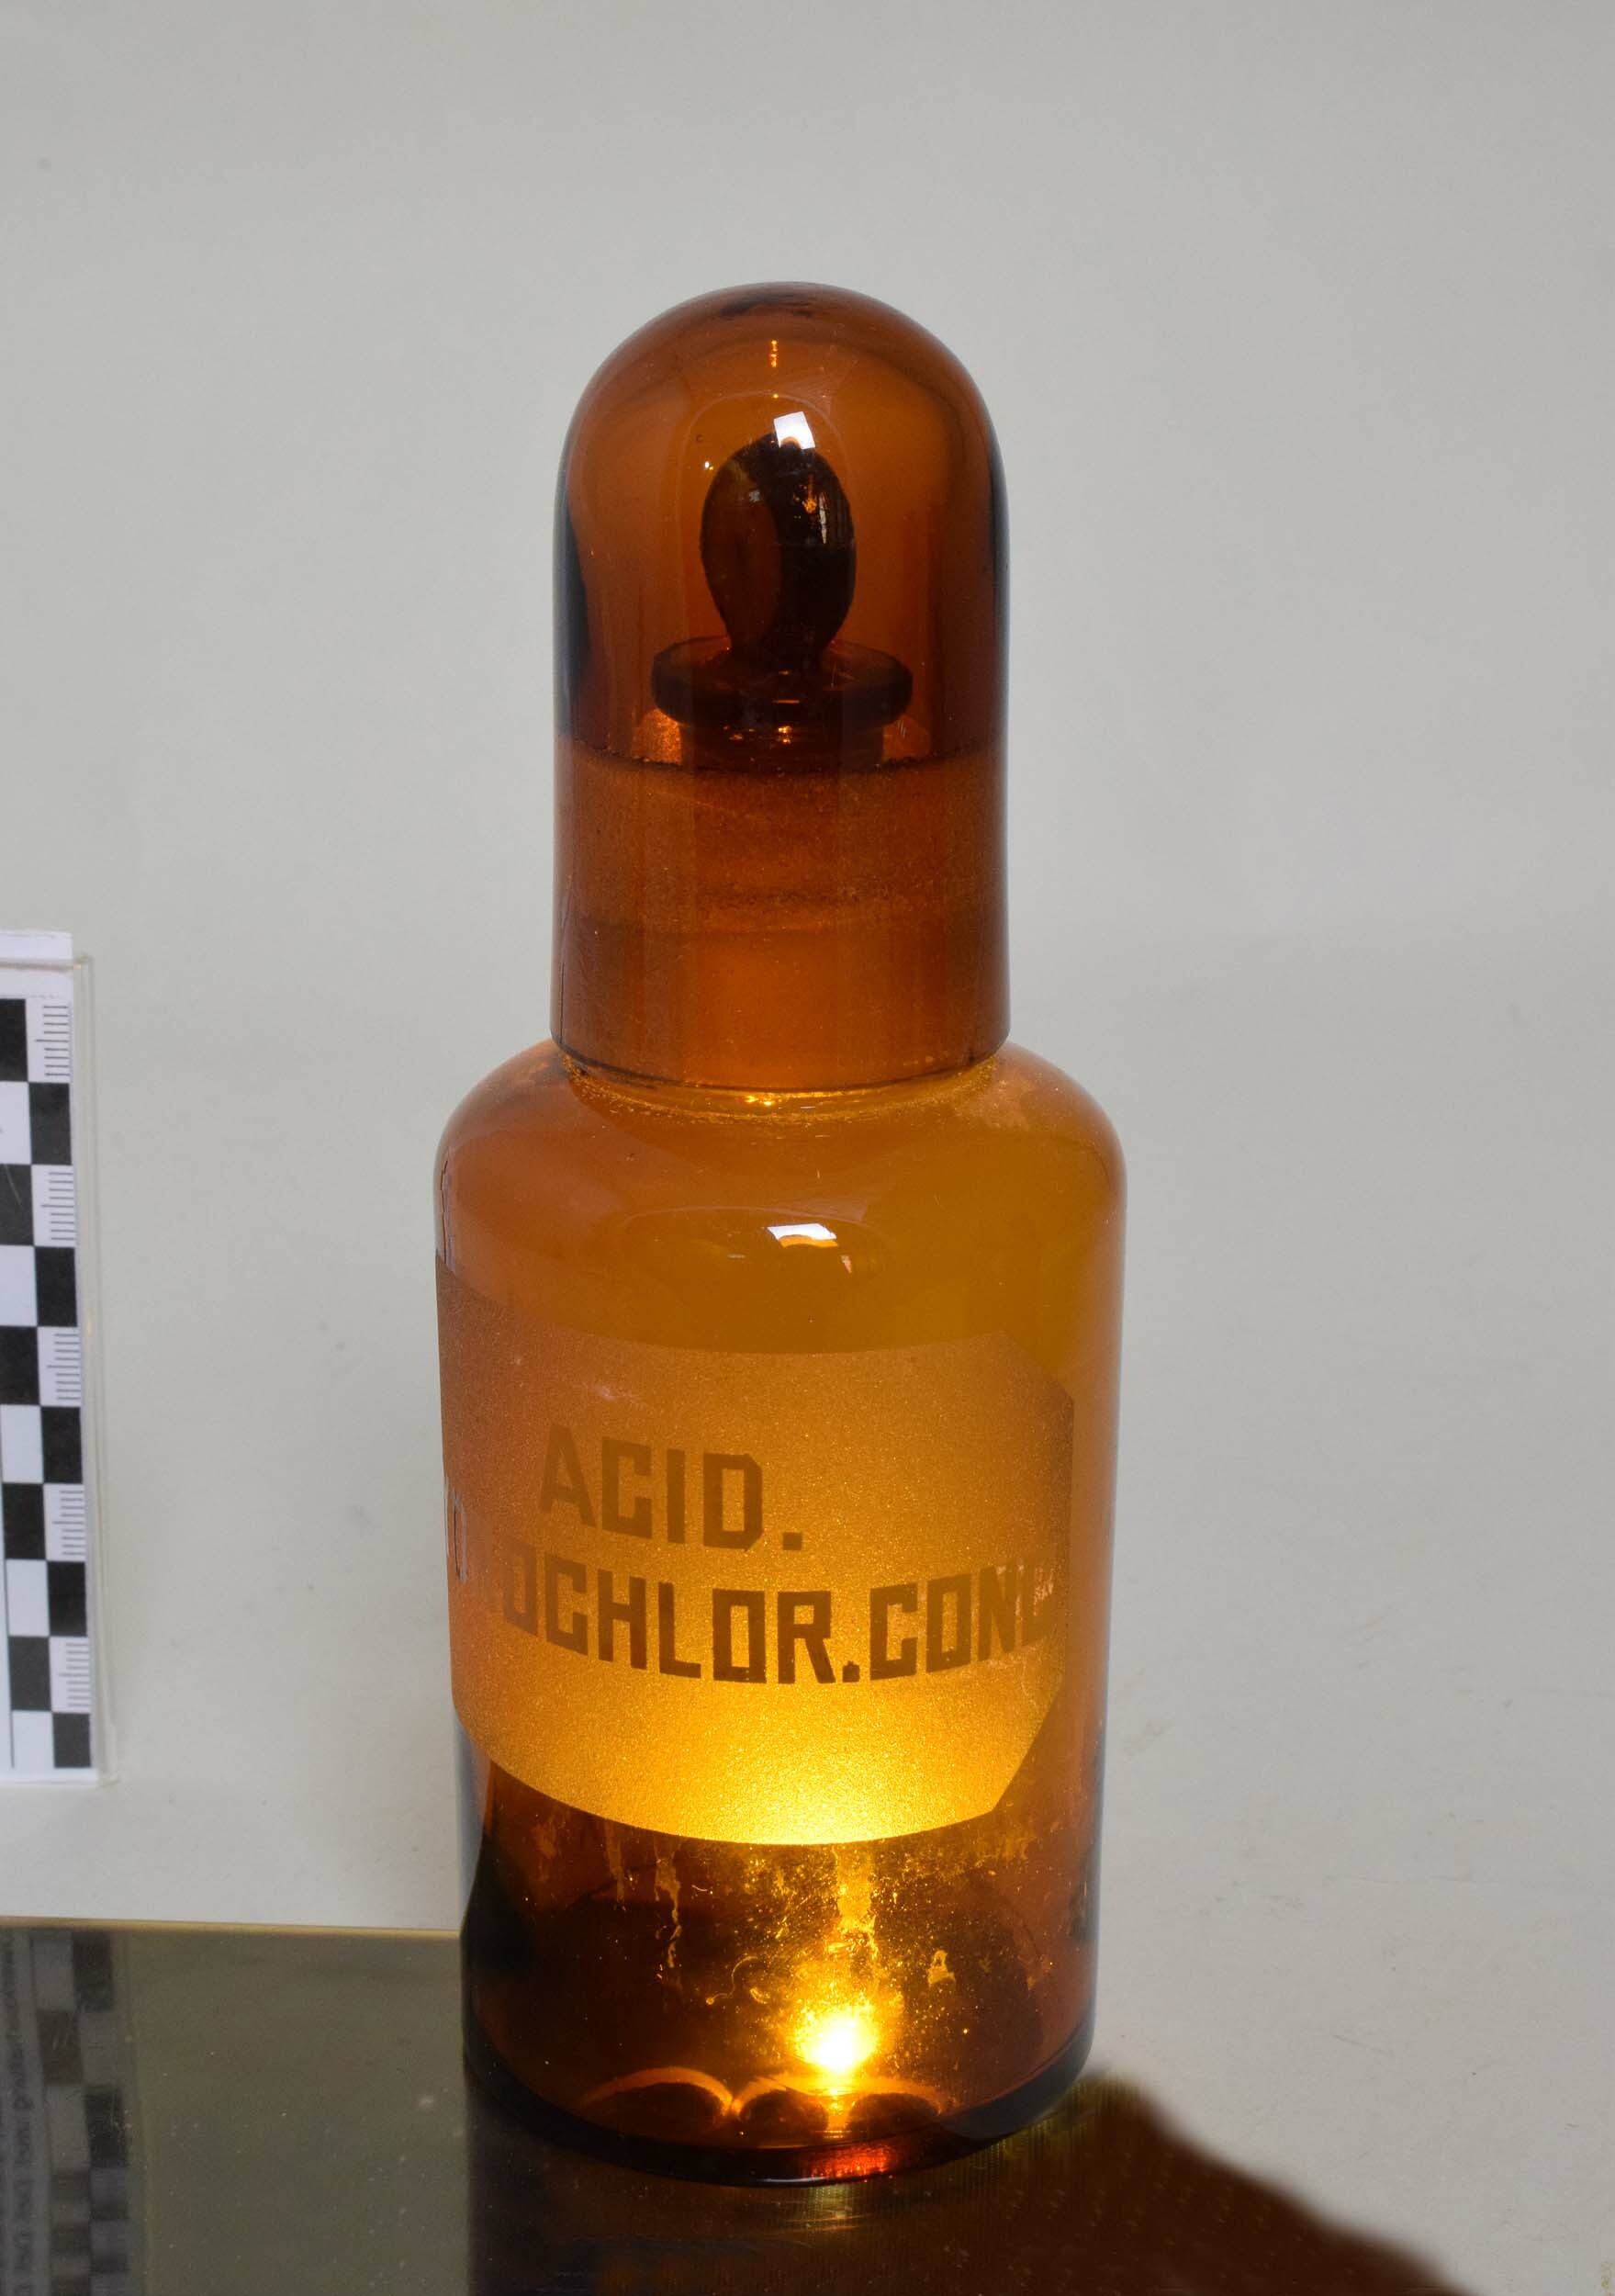 Apothekenflasche "Acid. Hydrochlor. chong." (Heimatmuseum Dohna CC BY-NC-SA)